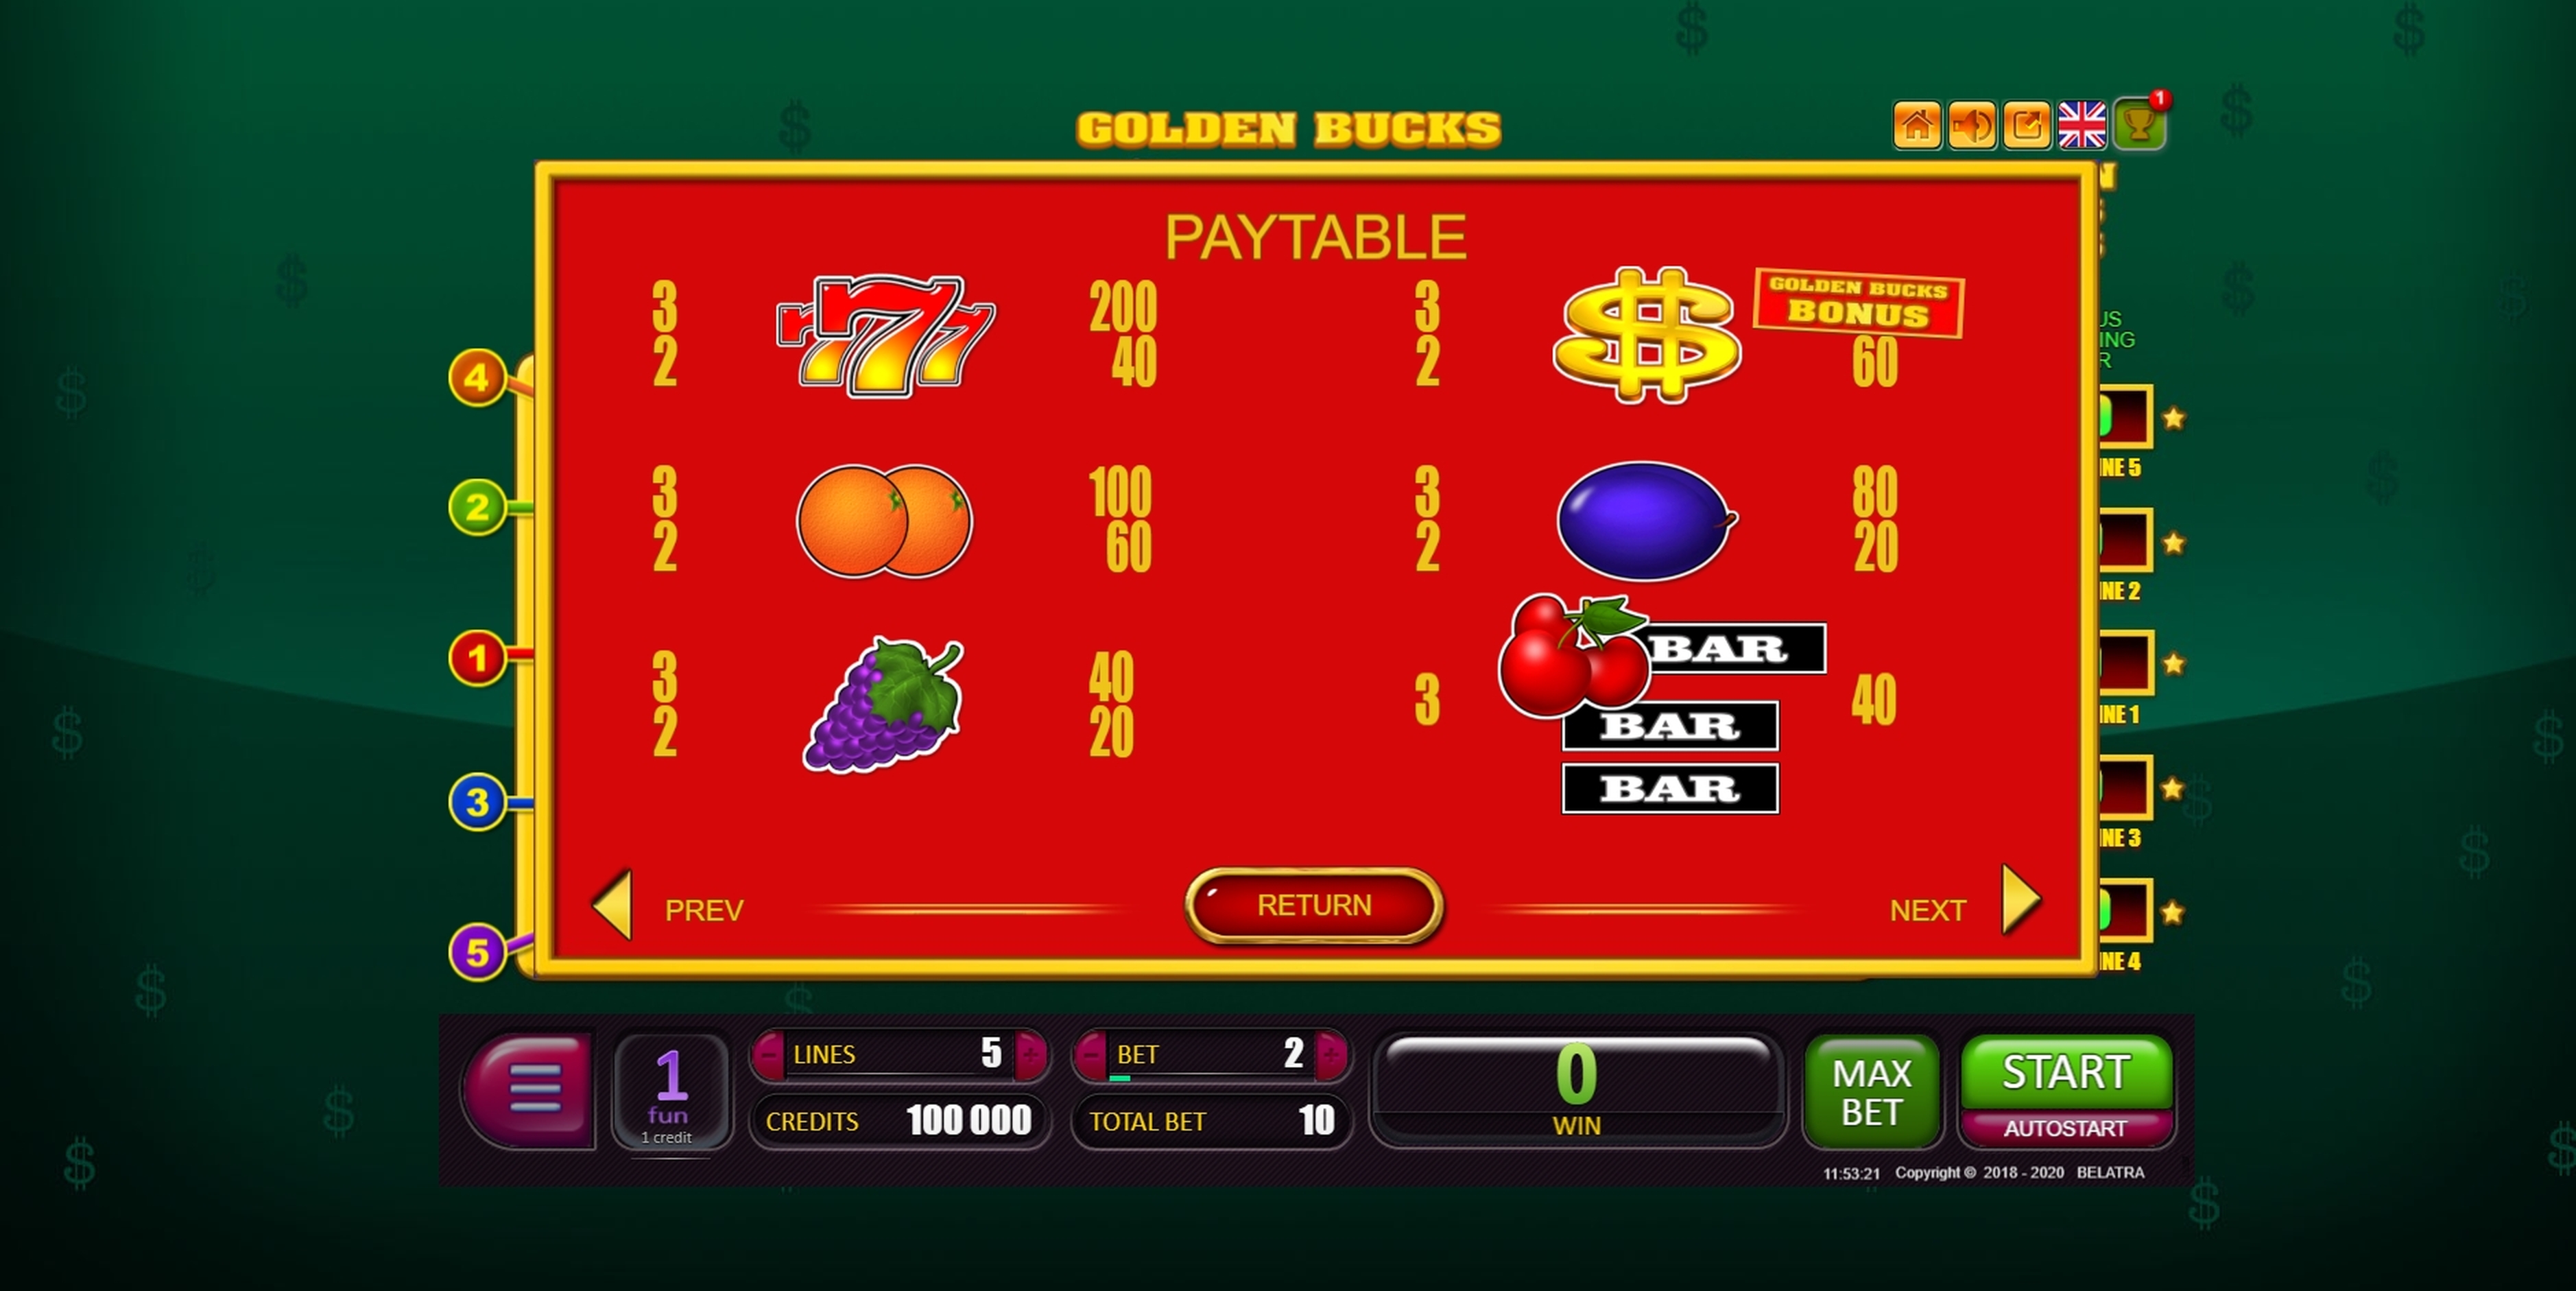 Info of Golden Bucks Slot Game by Belatra Games